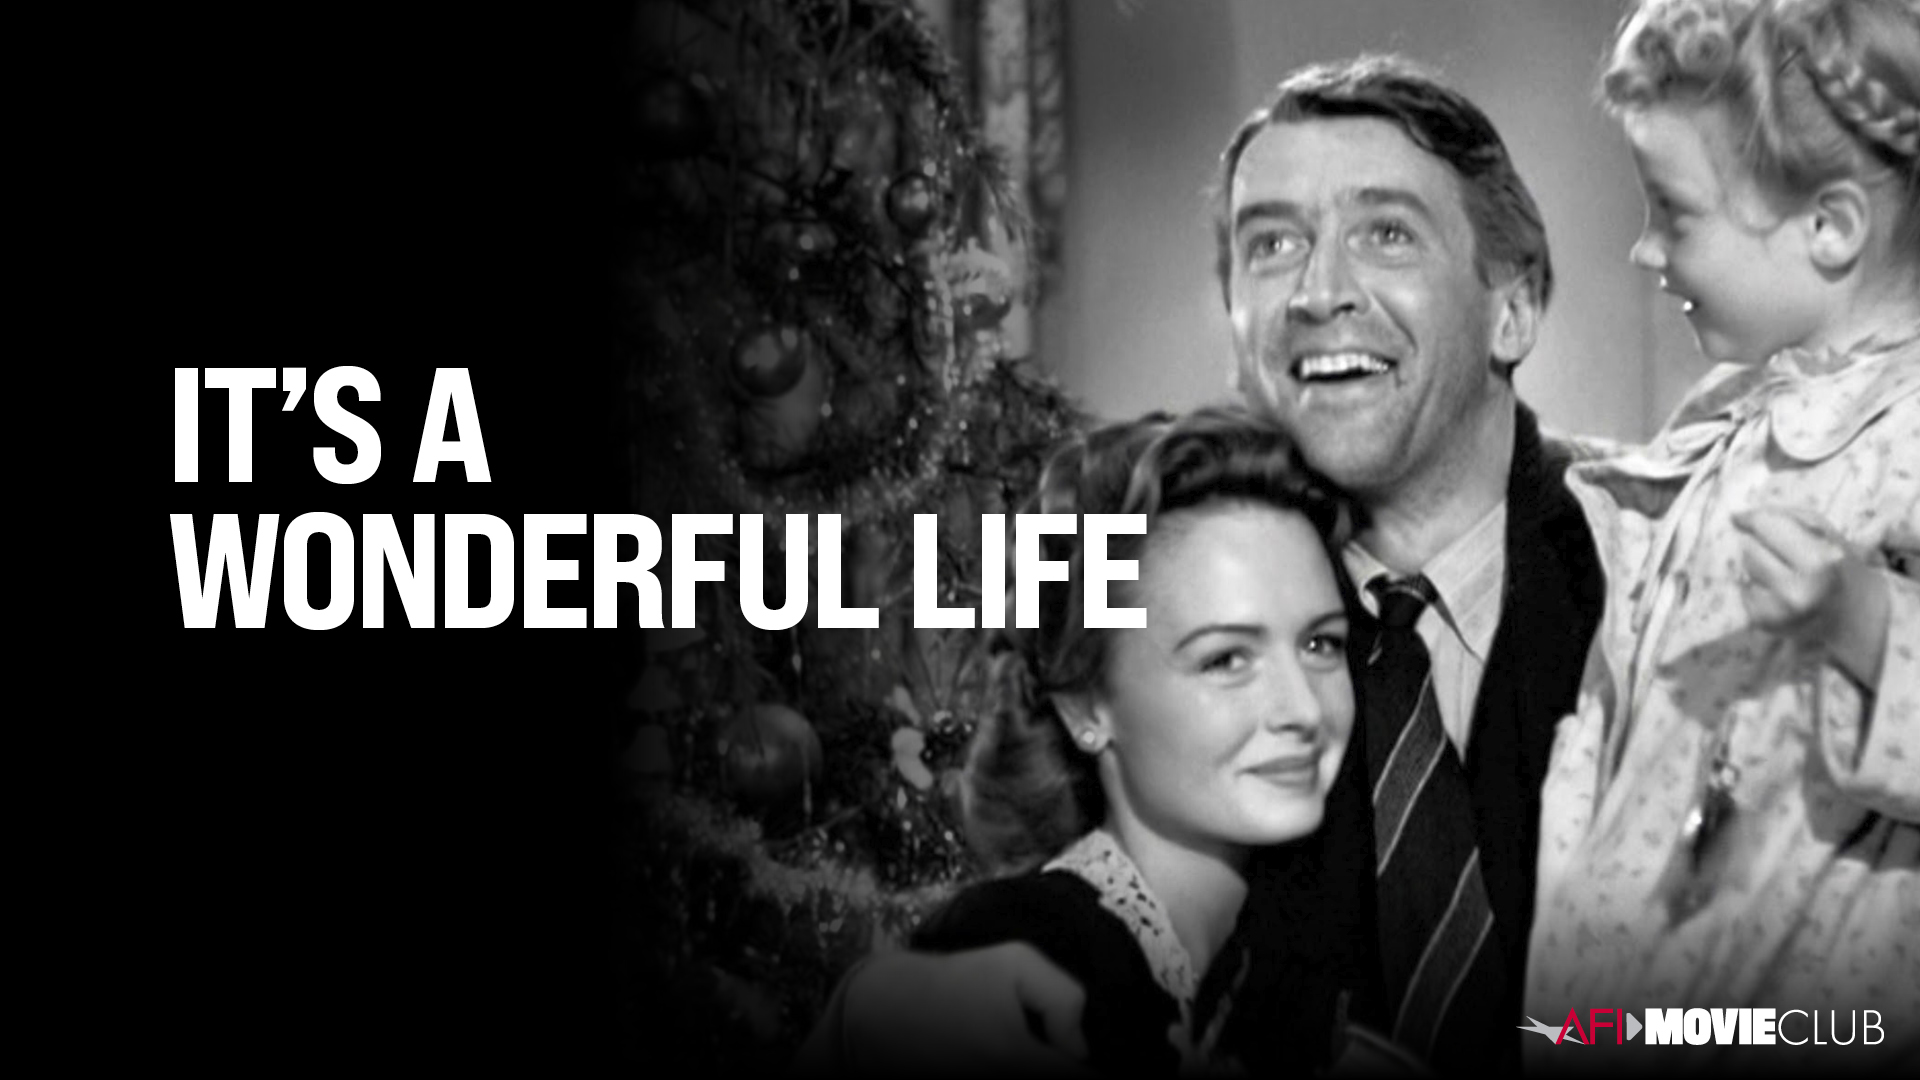 It's A Wonderful Life Film Still - James Stewart, Donna Reed, and Karolyn Grimes